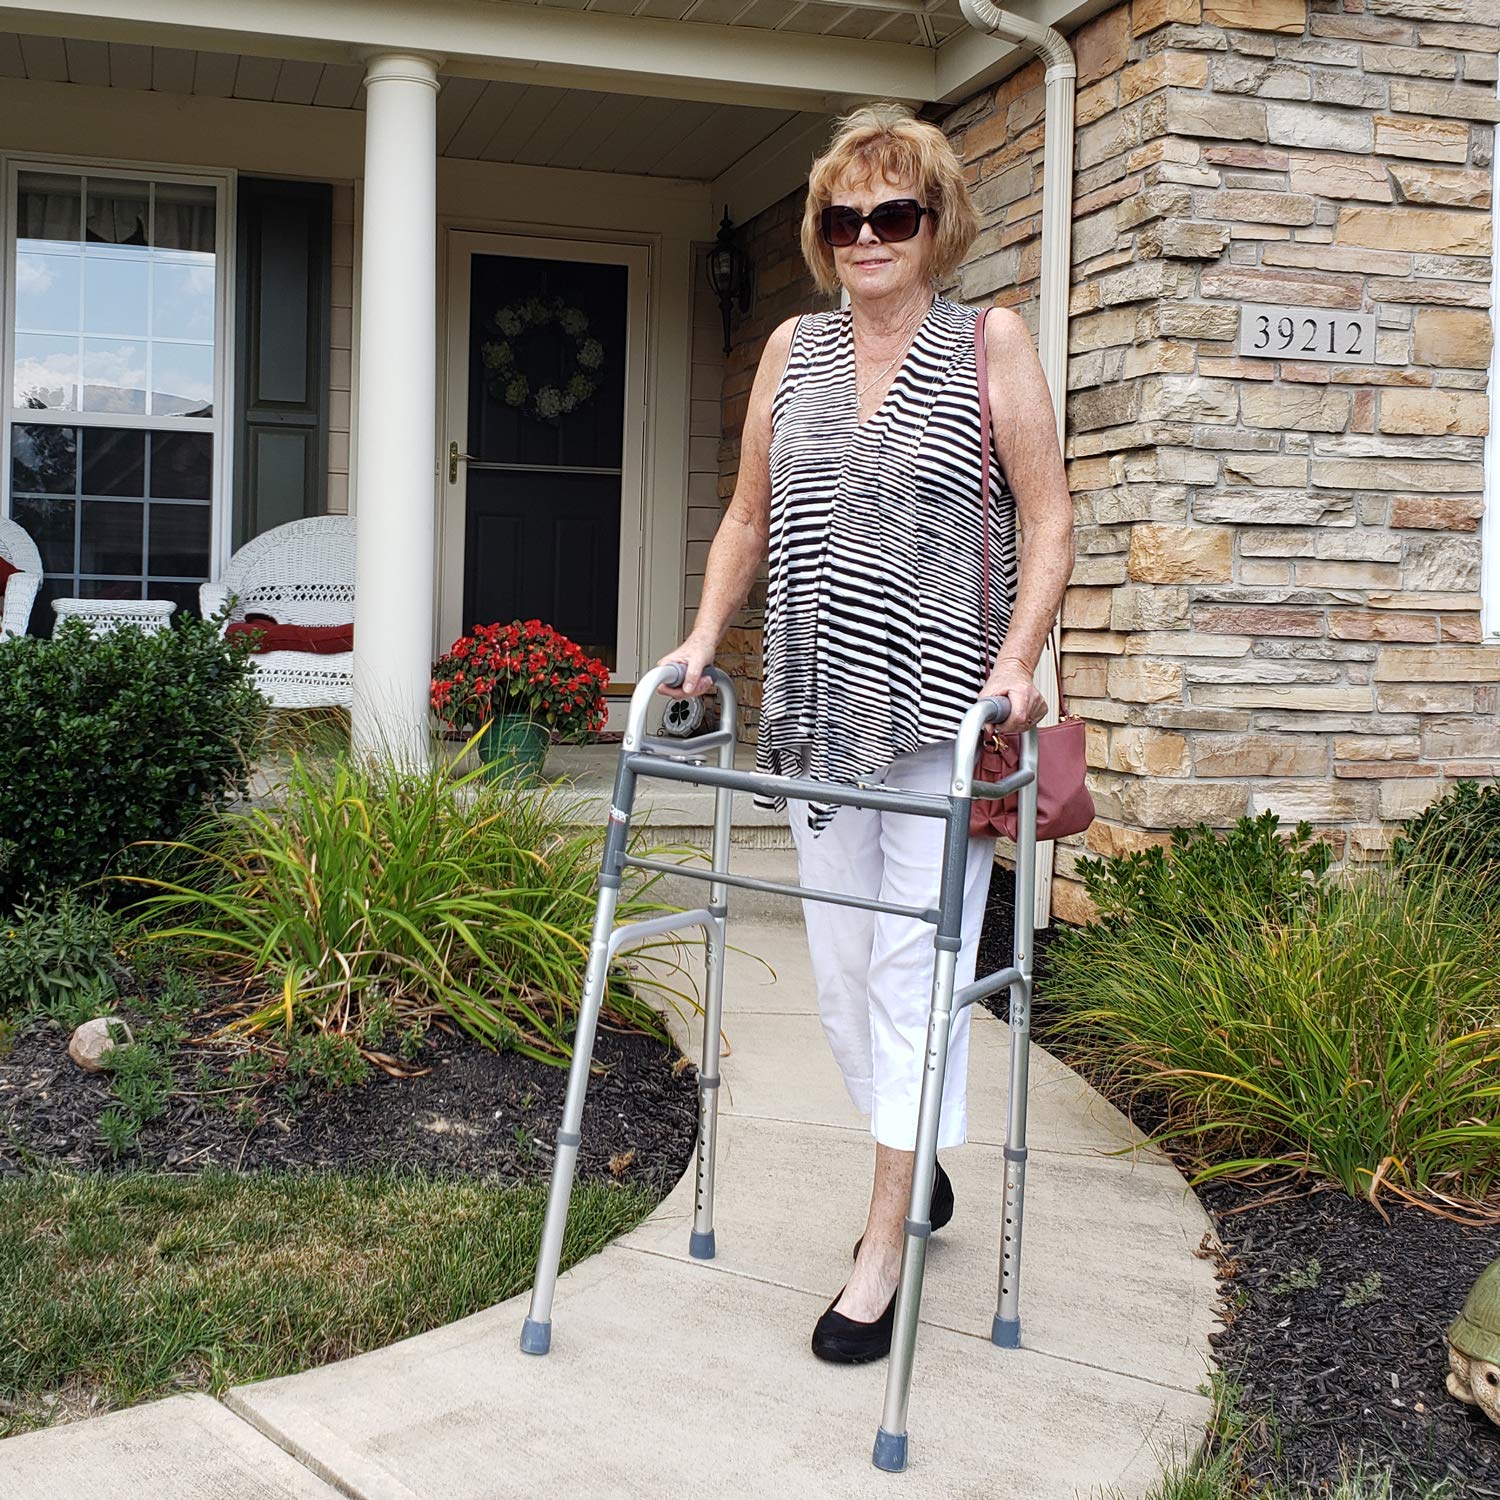 An elderly woman walking with a Walker outside her home